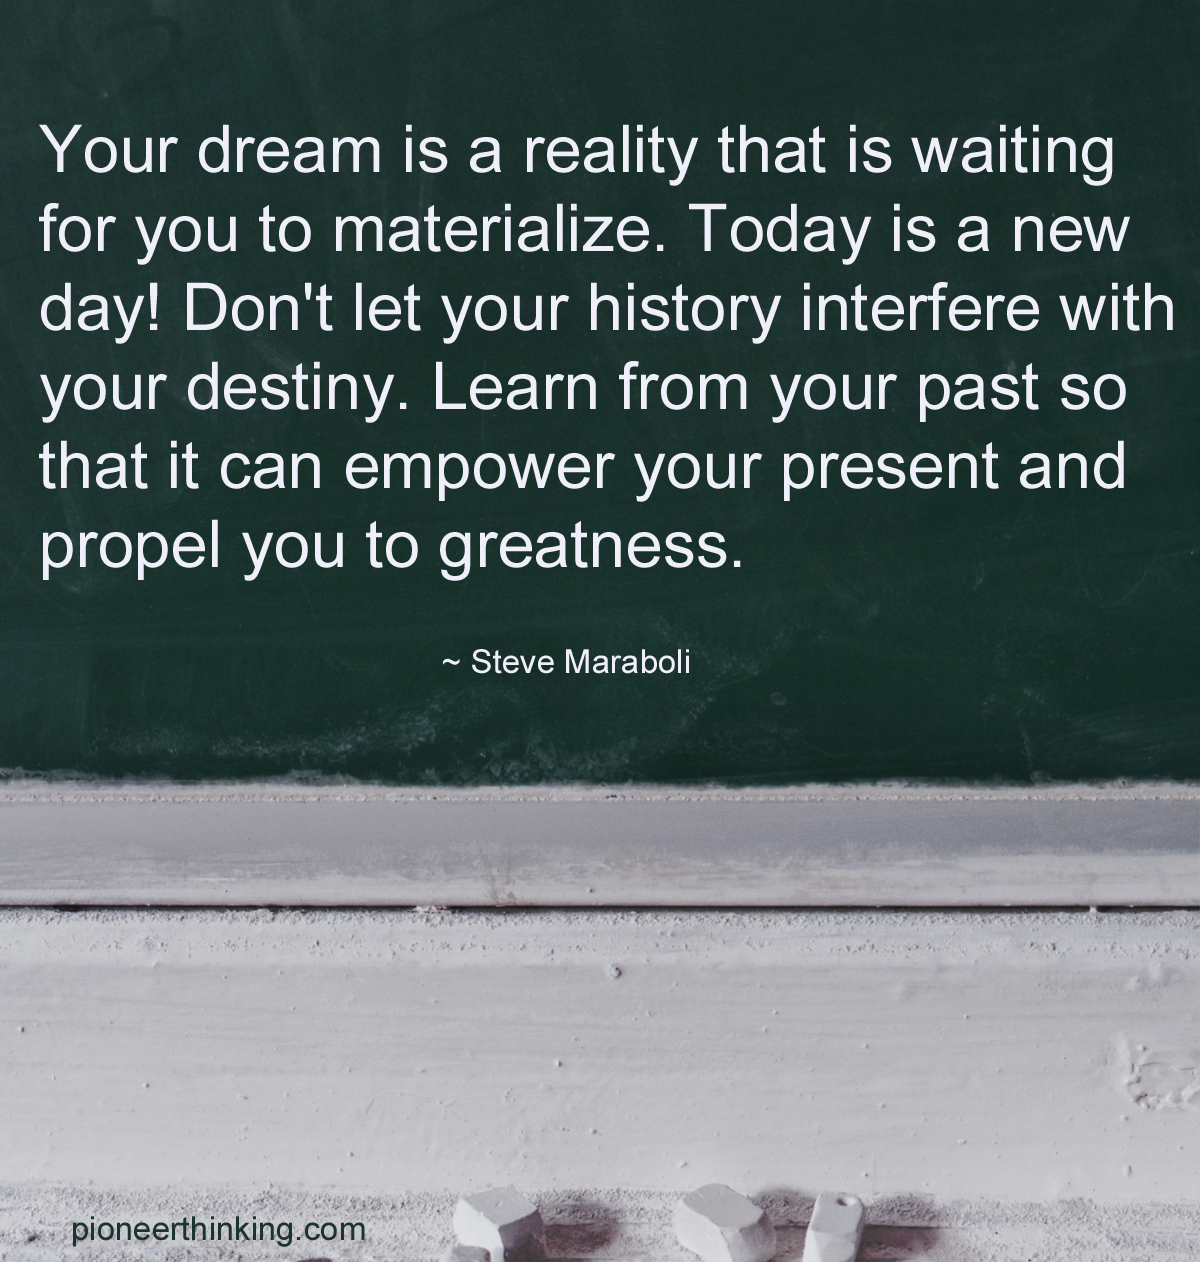 Your Dream is a Reality – Steve Maraboli